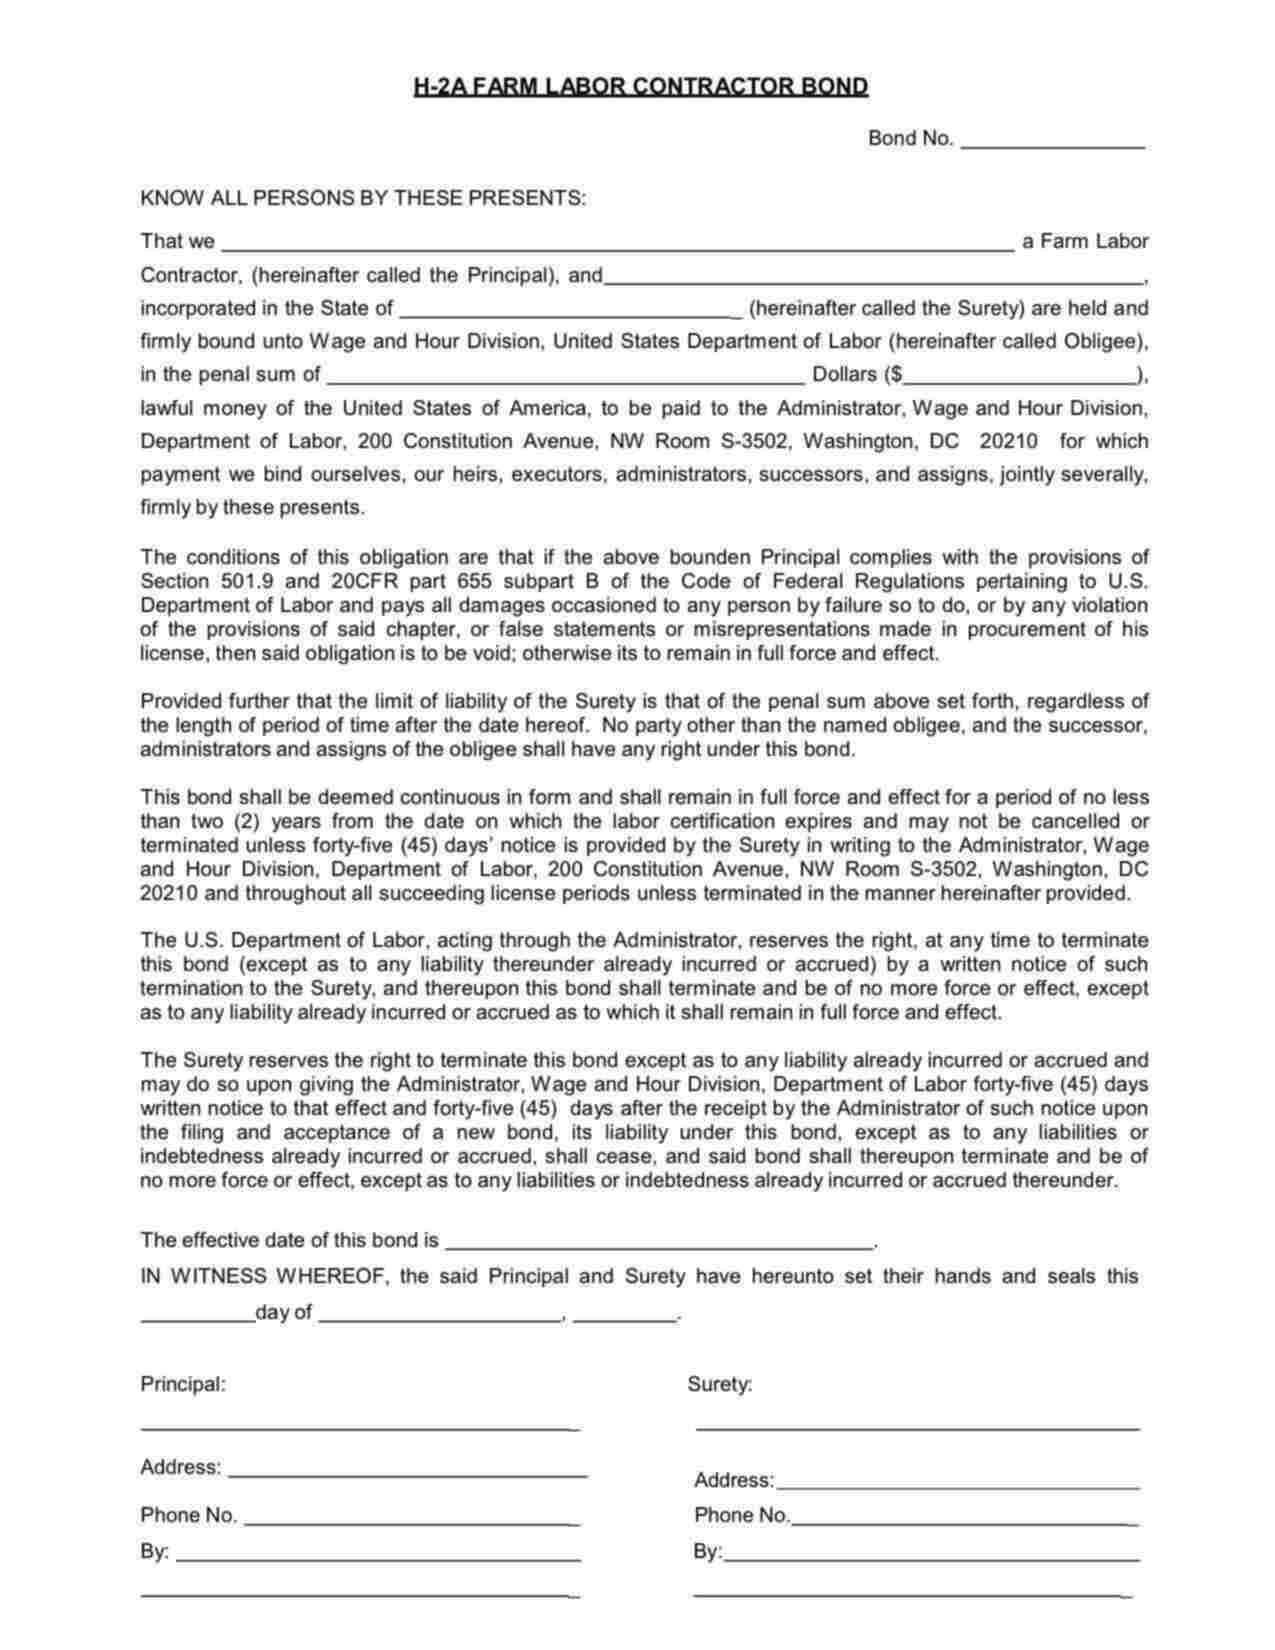 Federal H-2A Farm Labor Contractor Bond Form